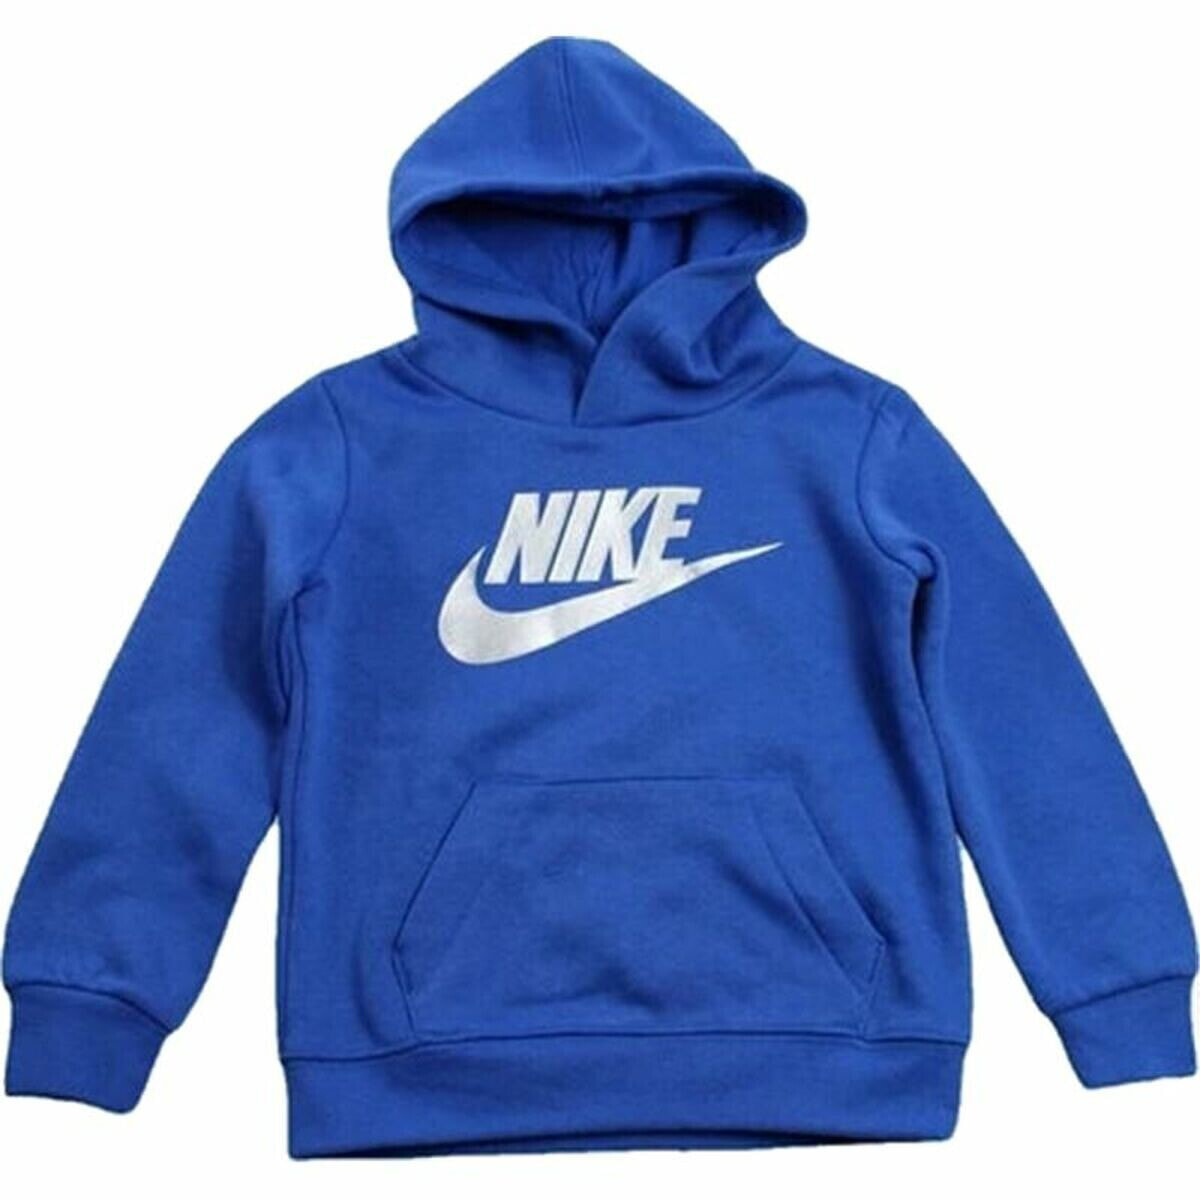 Children’s Hoodie Nike Metallic HBR Gifting Blue